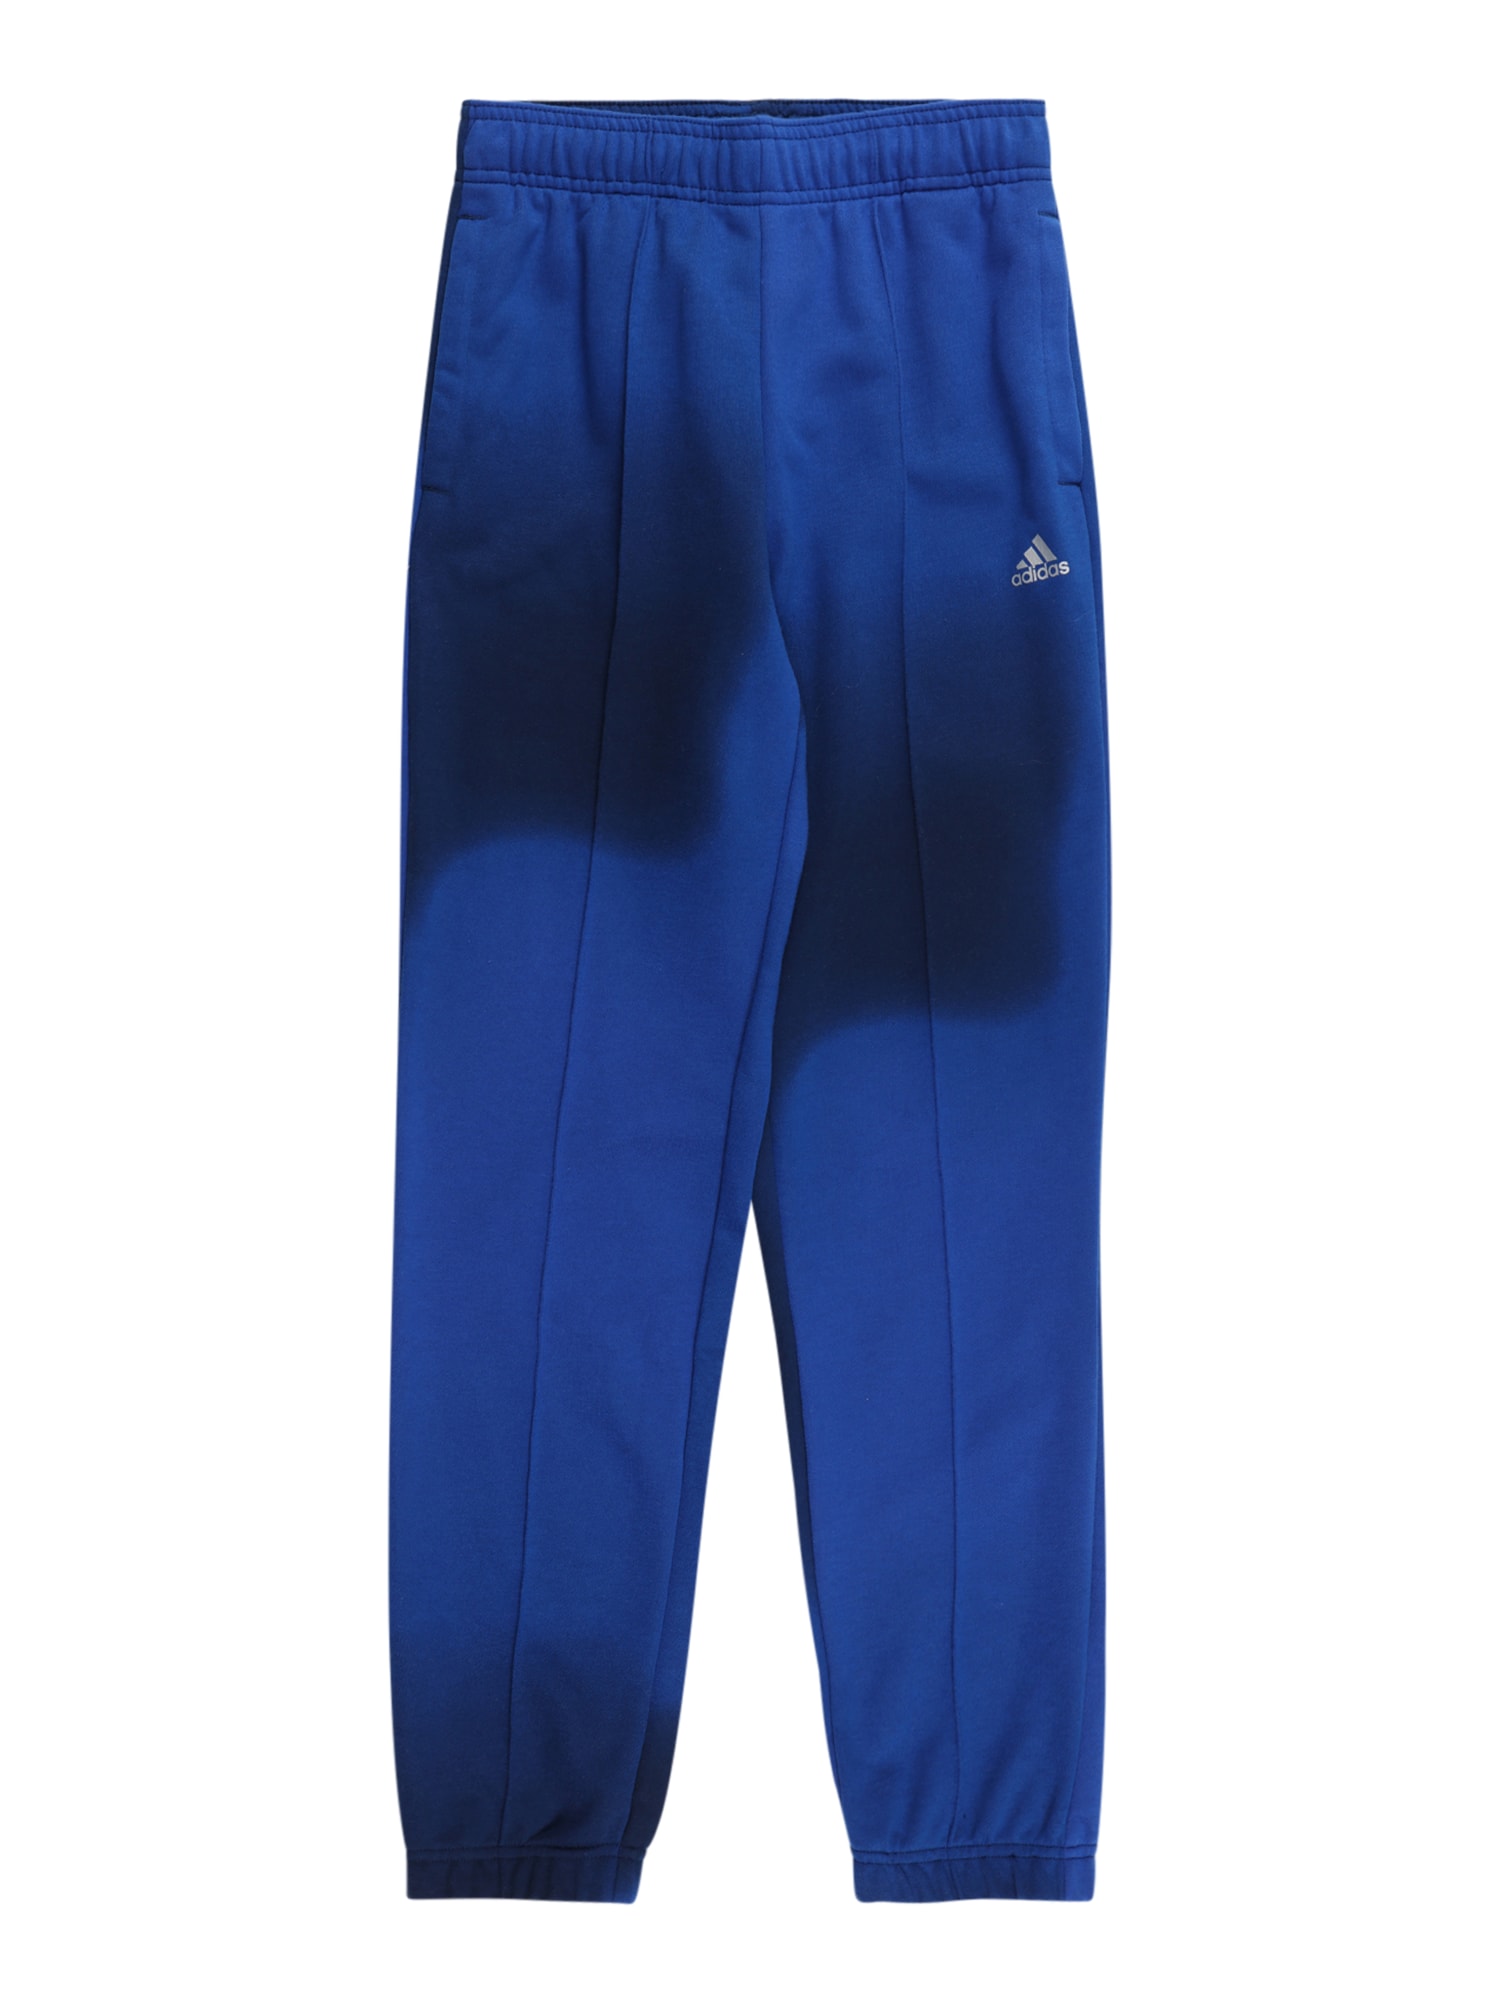 ADIDAS PERFORMANCE Športne hlače  mornarska / kobalt modra